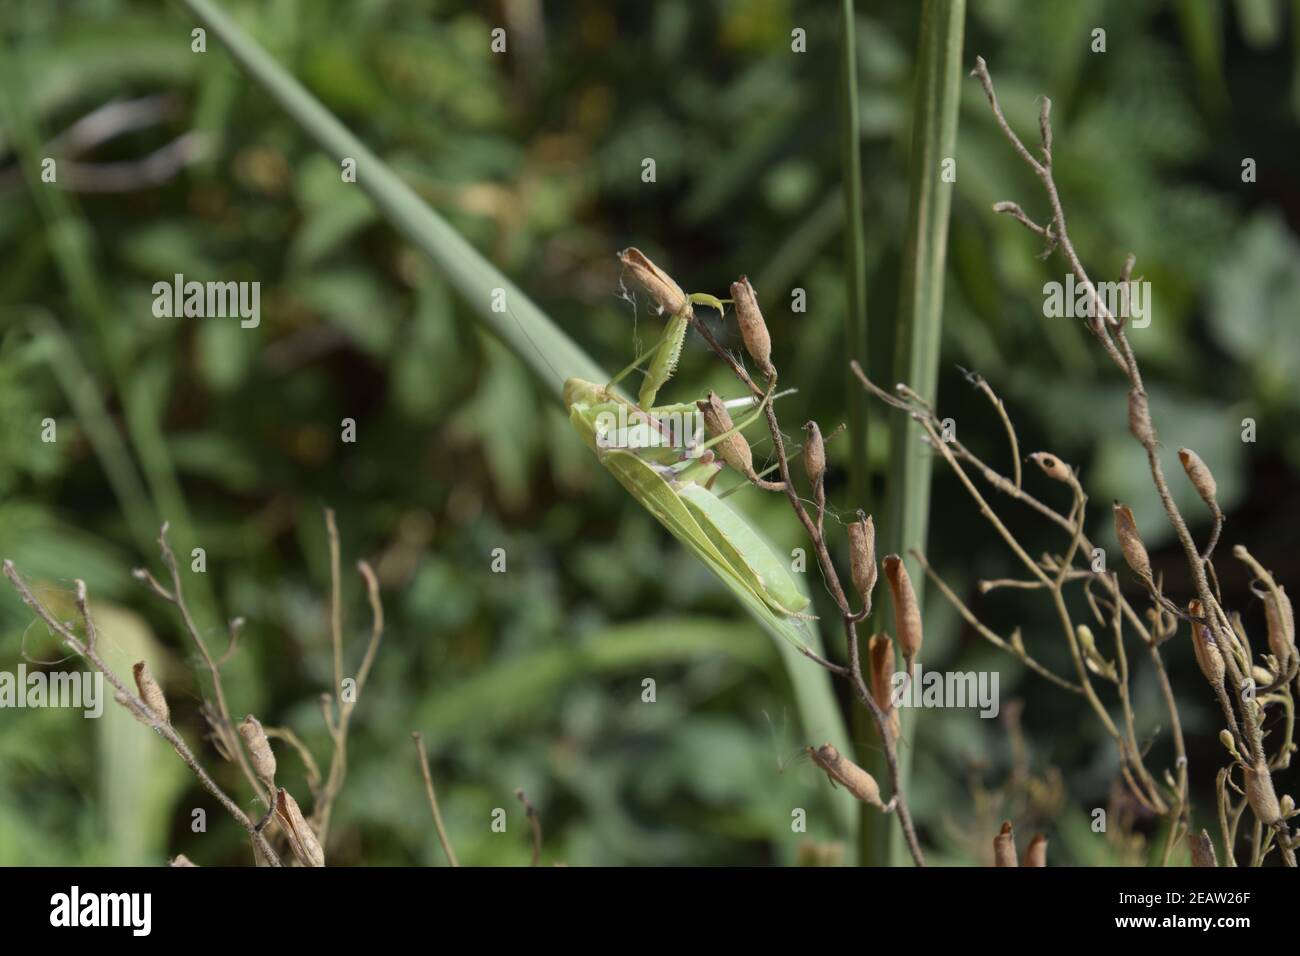 The female mantis religios. Predatory insects mantis Stock Photo